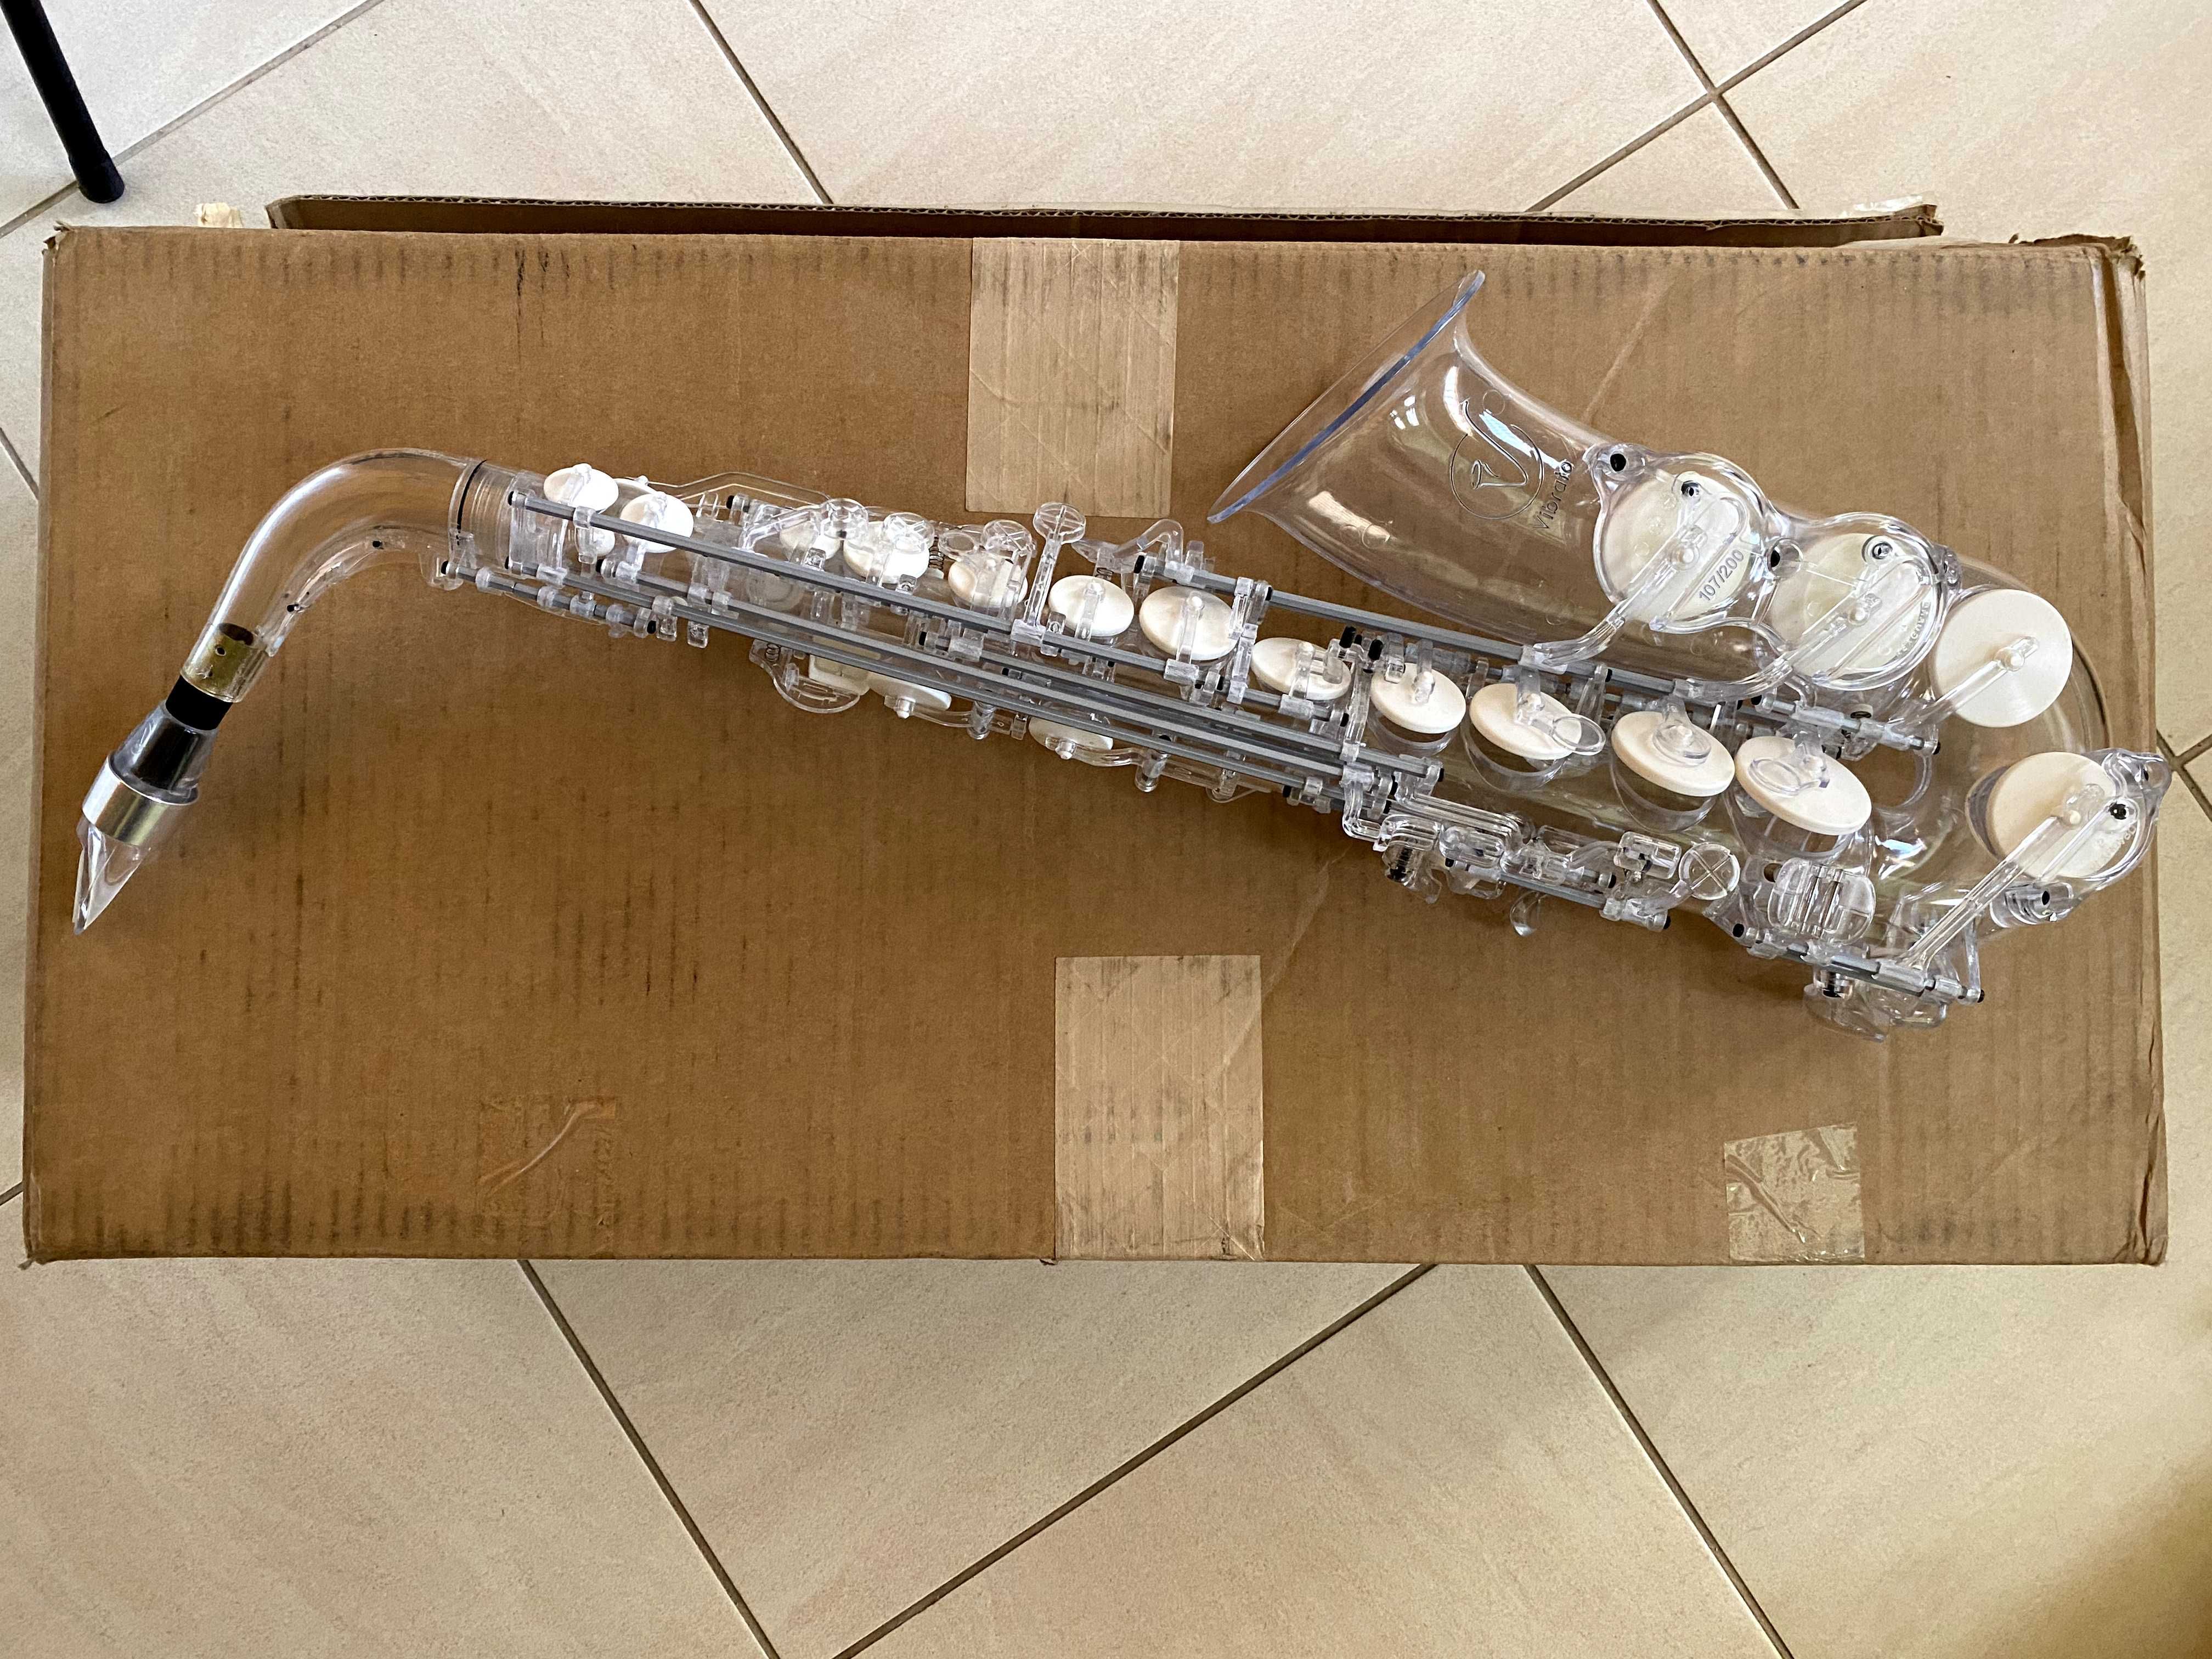 Saxofone Alto Vibrato,  Modelo A1 SIII Clear em Policarbonato